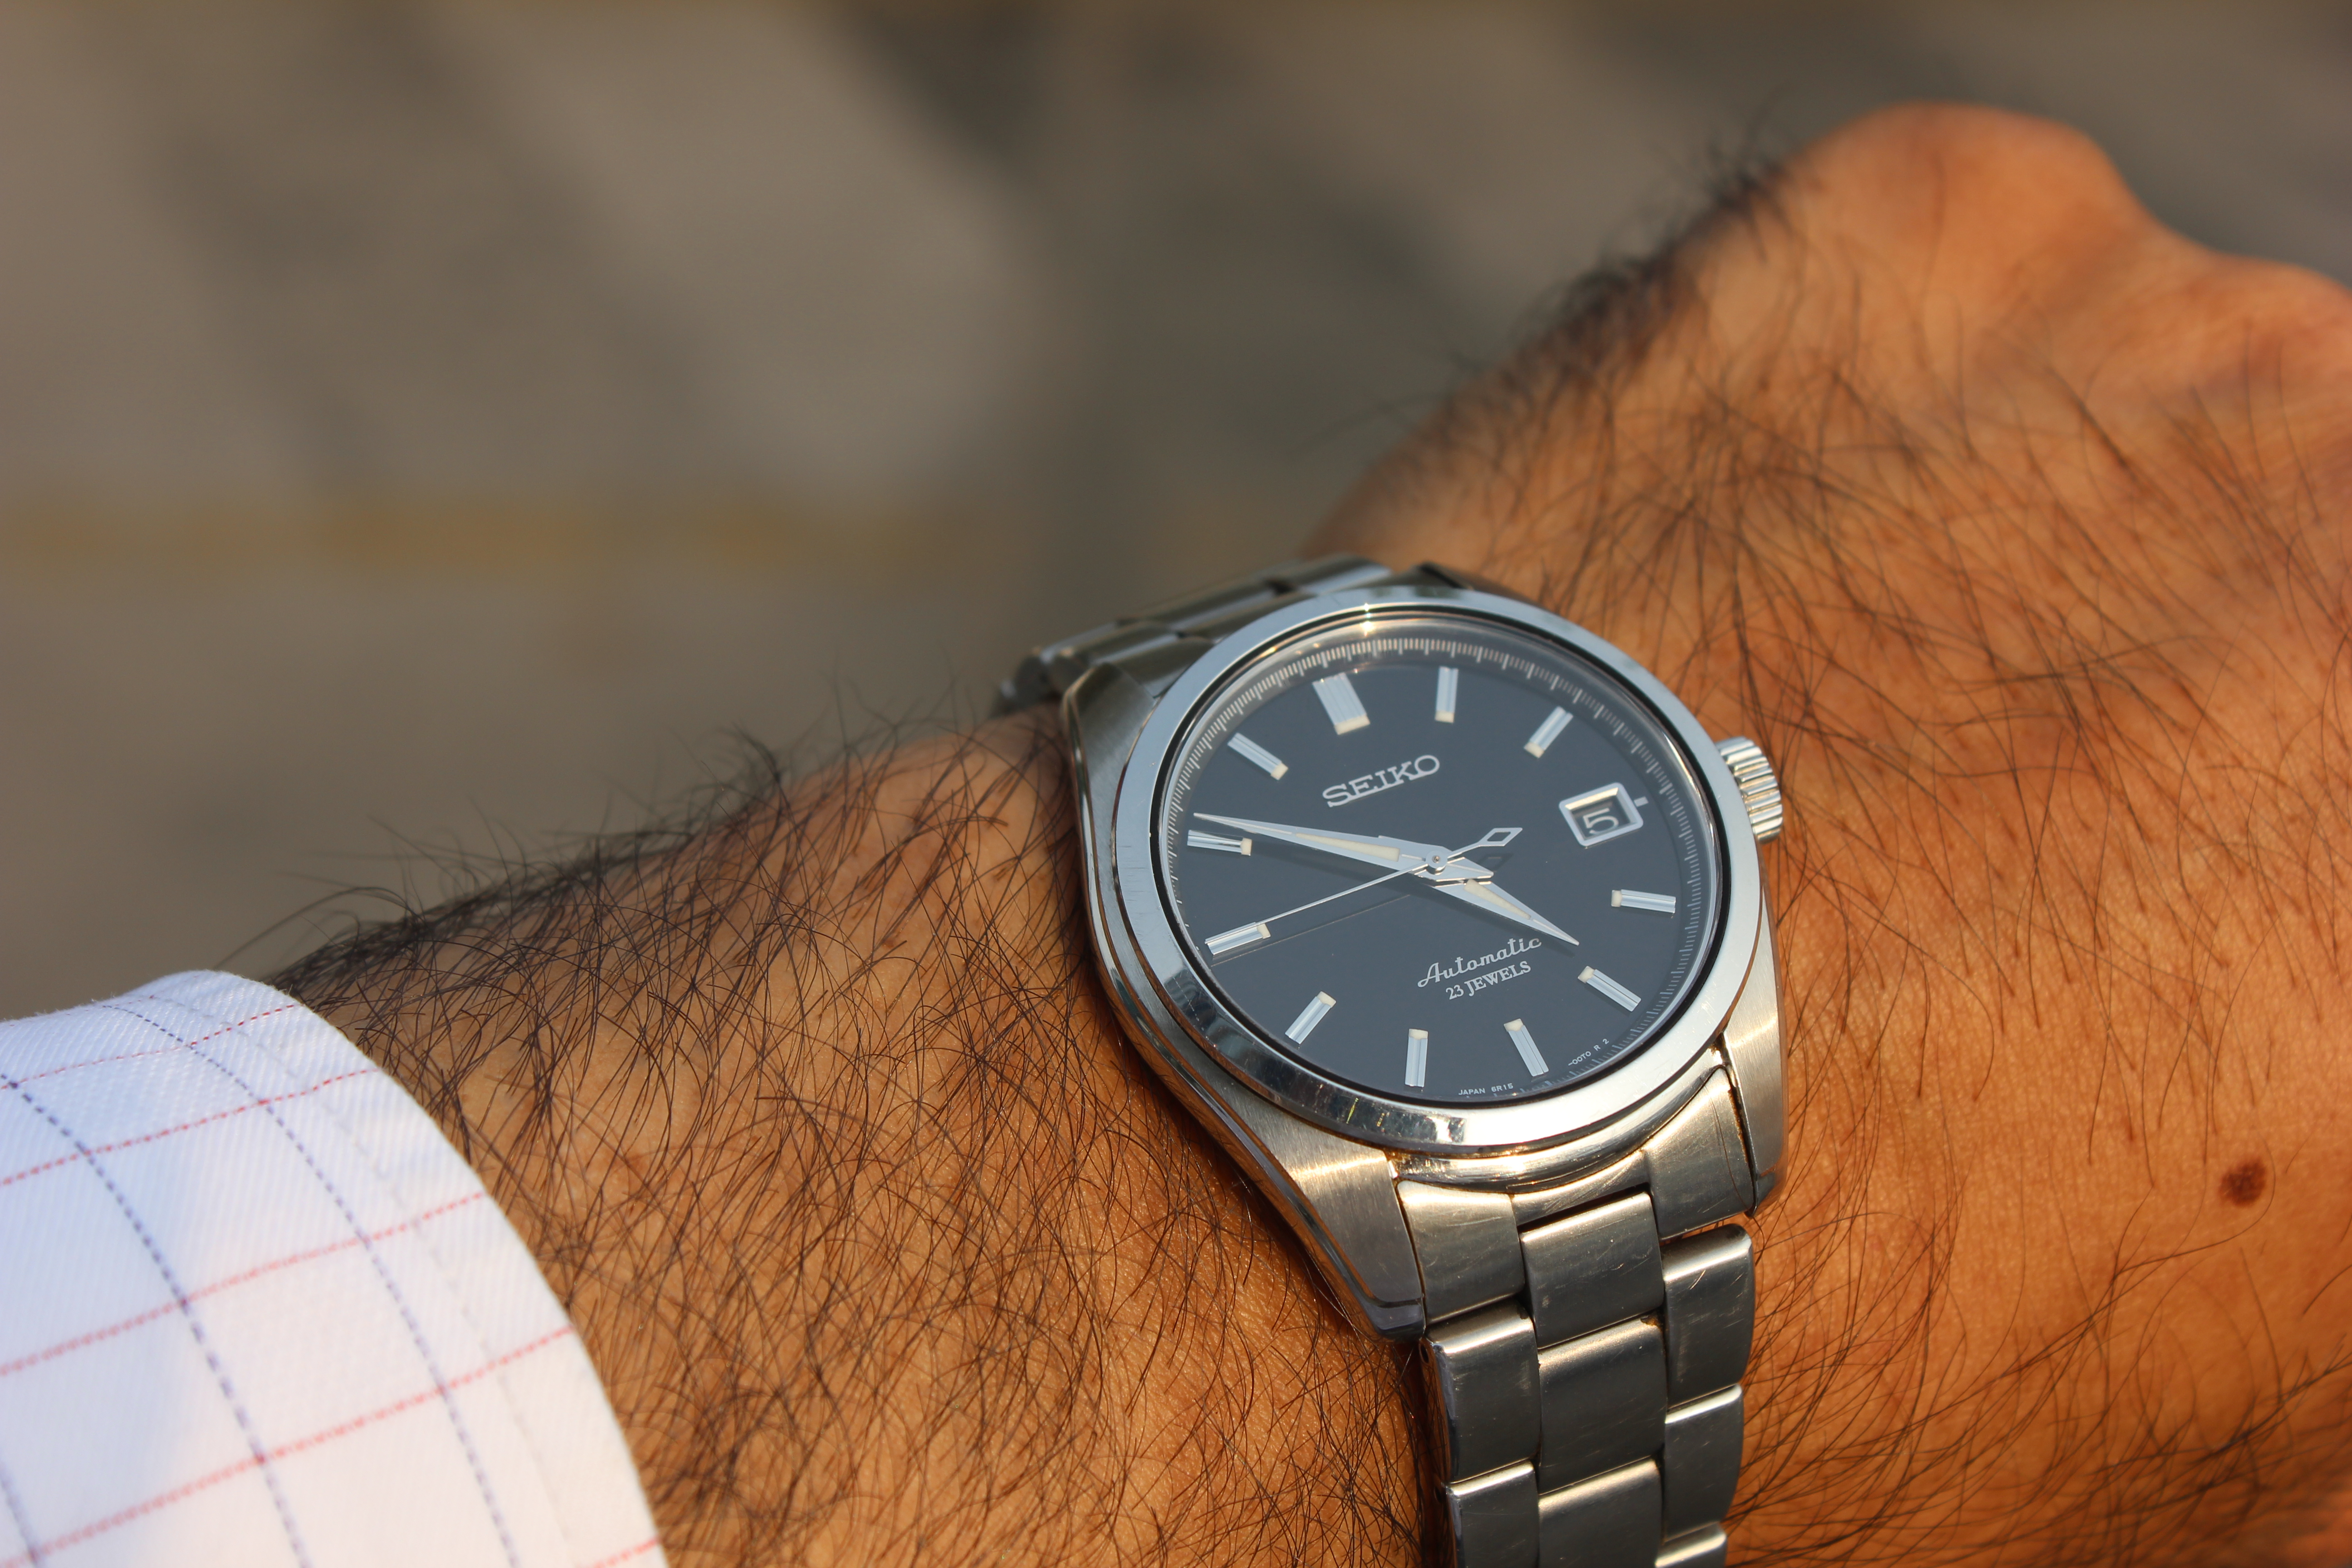 Seiko SARB033 Automatic Watch Review – WristReview.com – Featuring